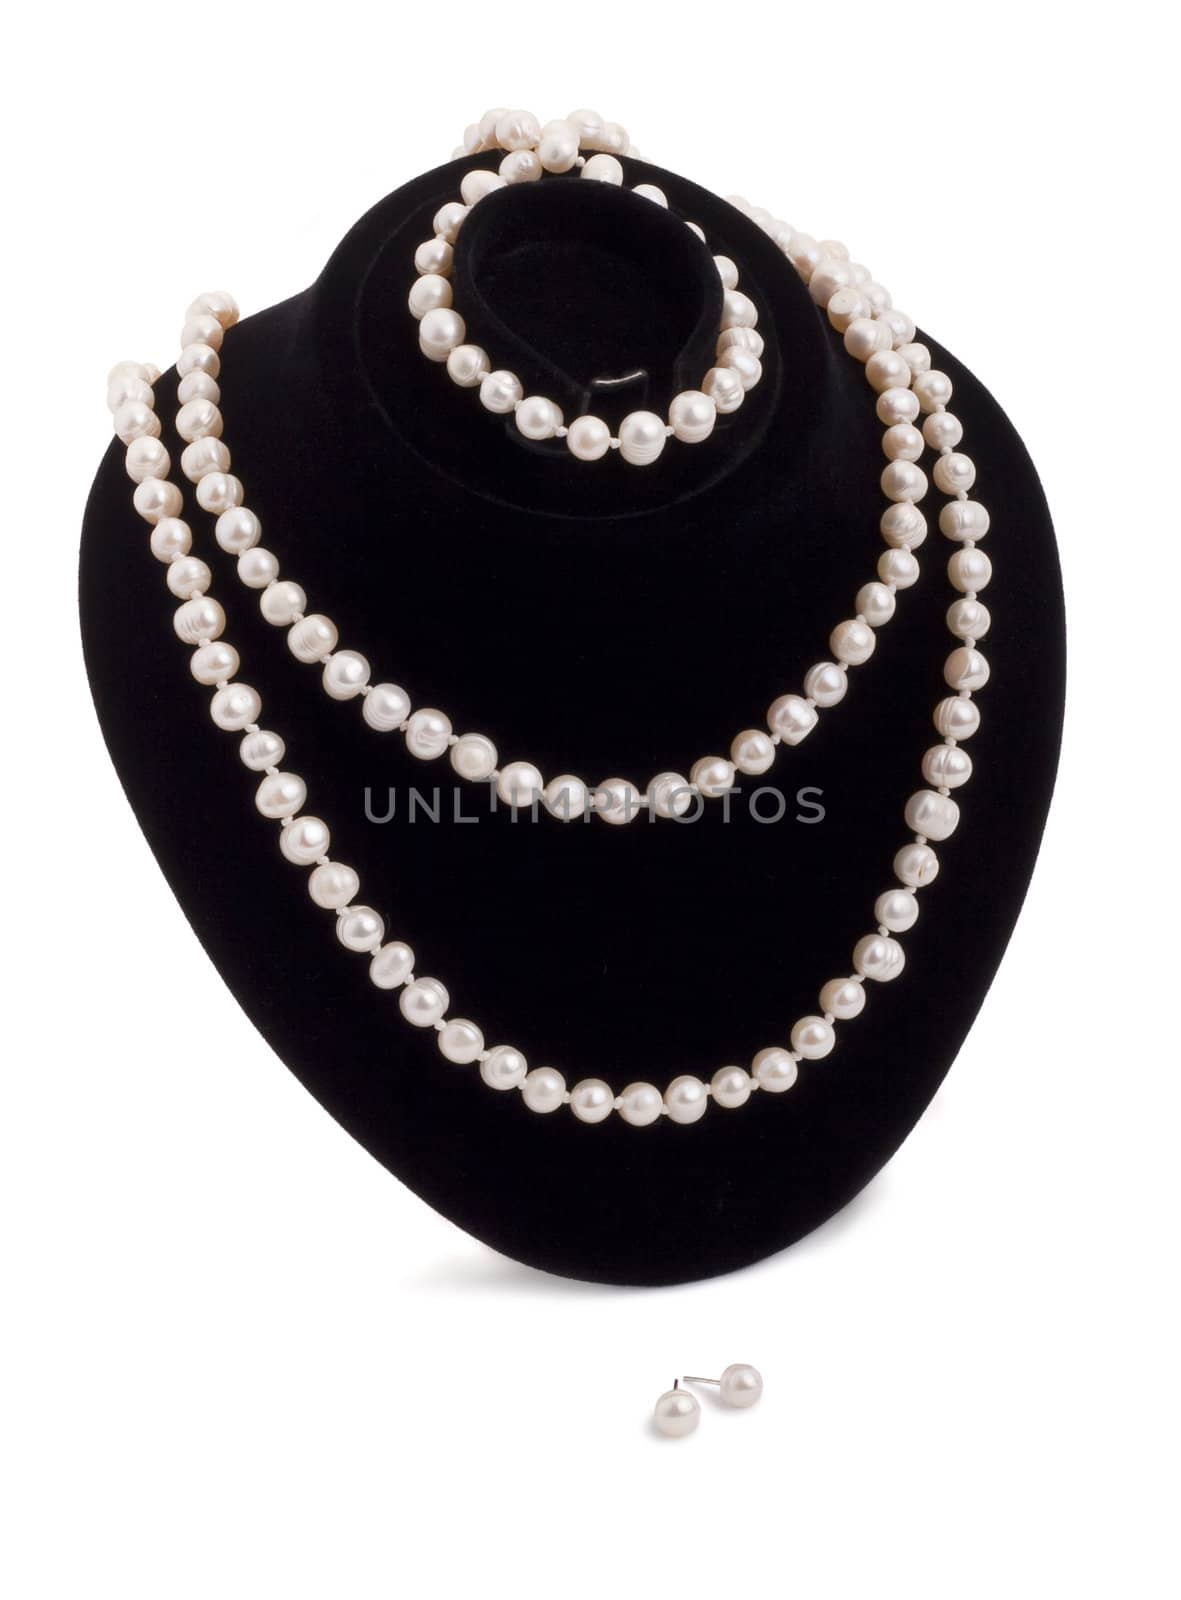 Pearl necklace by igor_stramyk